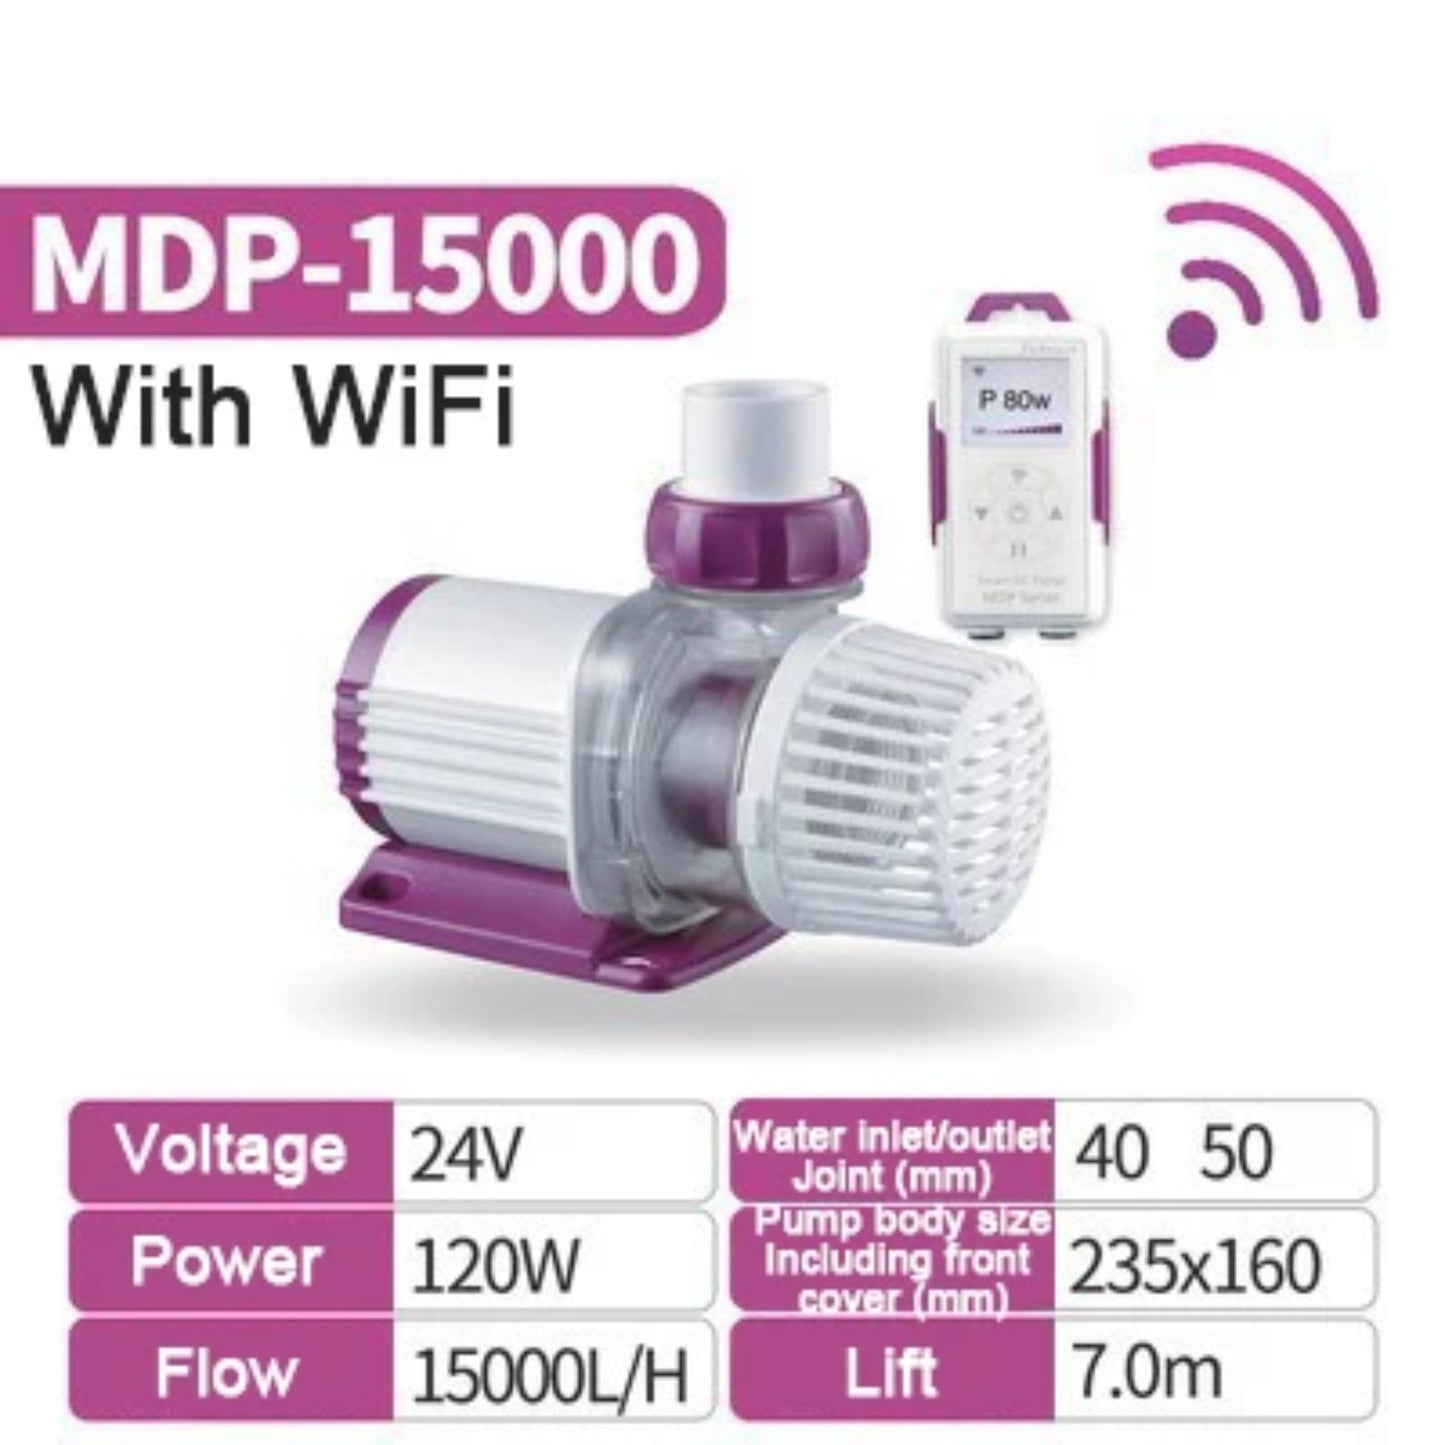 DC Pump MDP Series Wi-Fi - Jebao